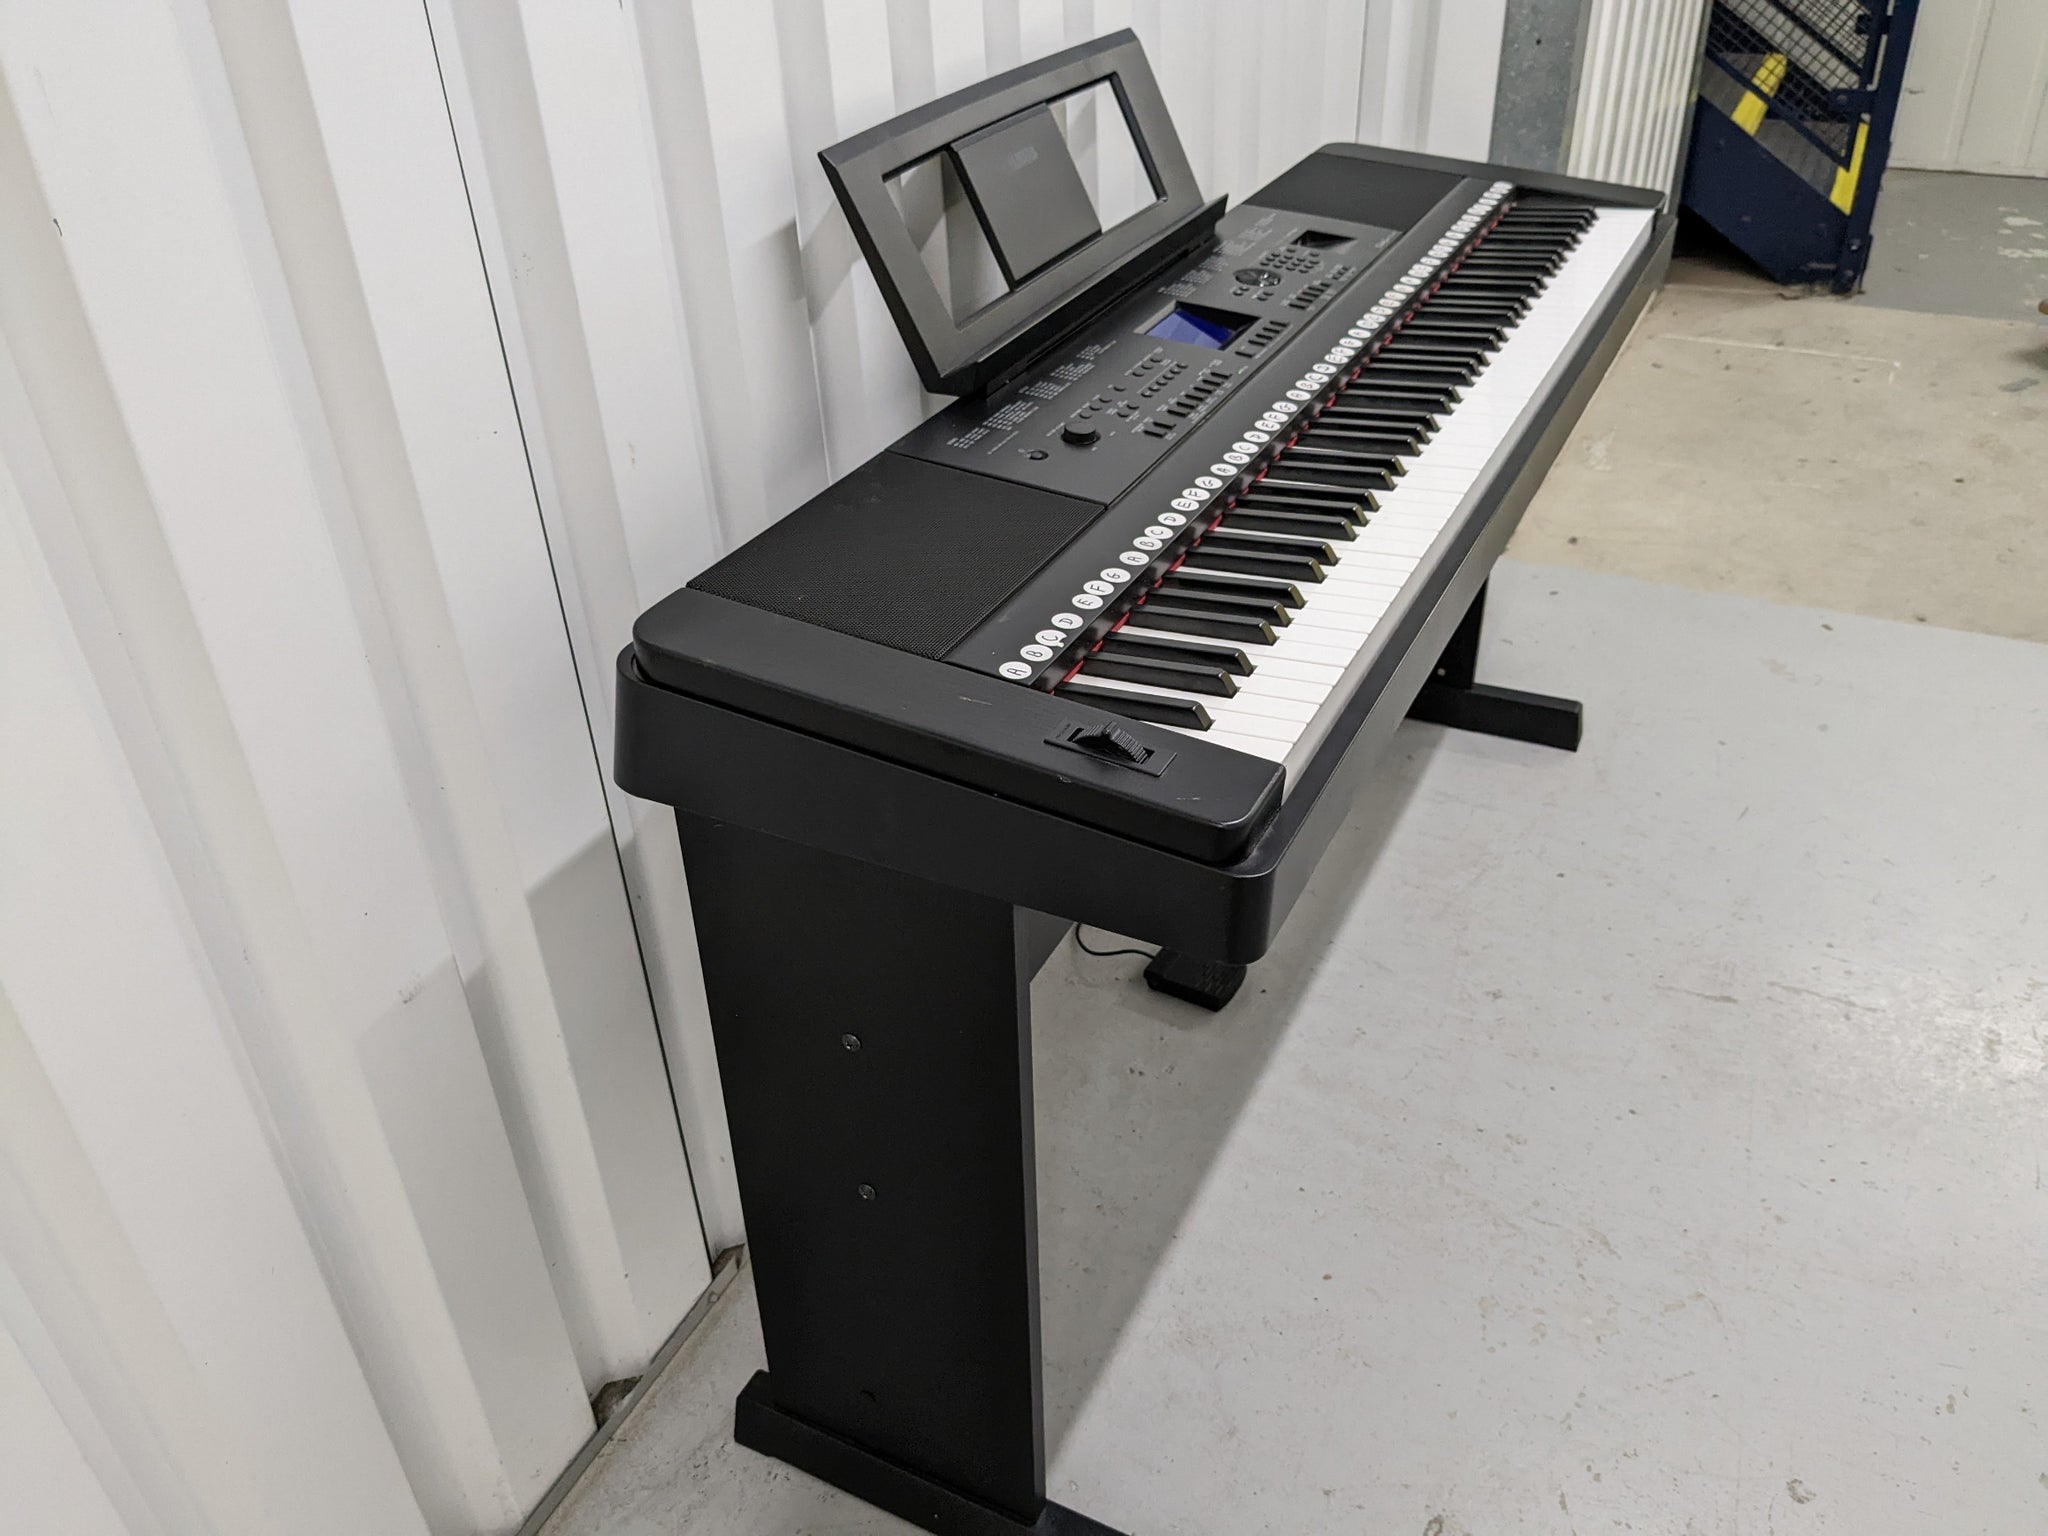 DISC Yamaha DGX 660 Digital Piano with Stand, Black